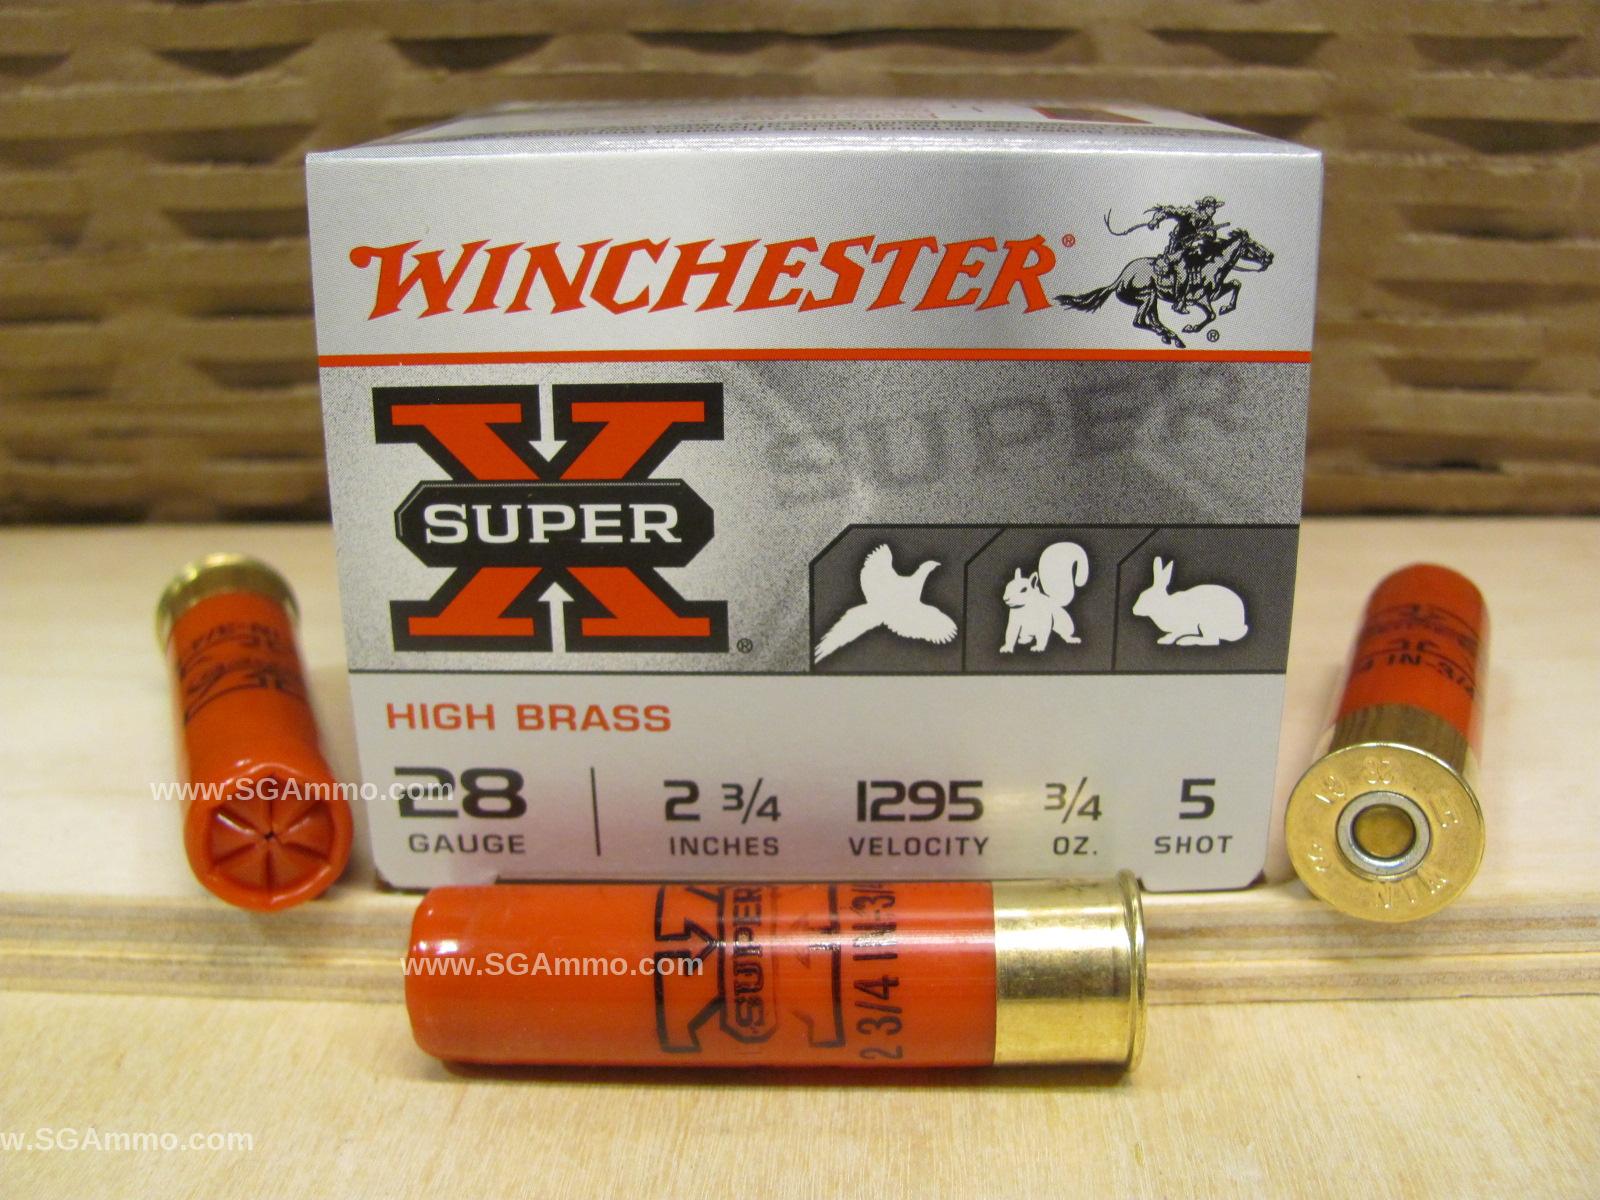 25 Round Box - 28 Gauge 2.75 Inch 3/4 Ounce Number 5 Shot Winchester Super X High Brass Ammo - X285